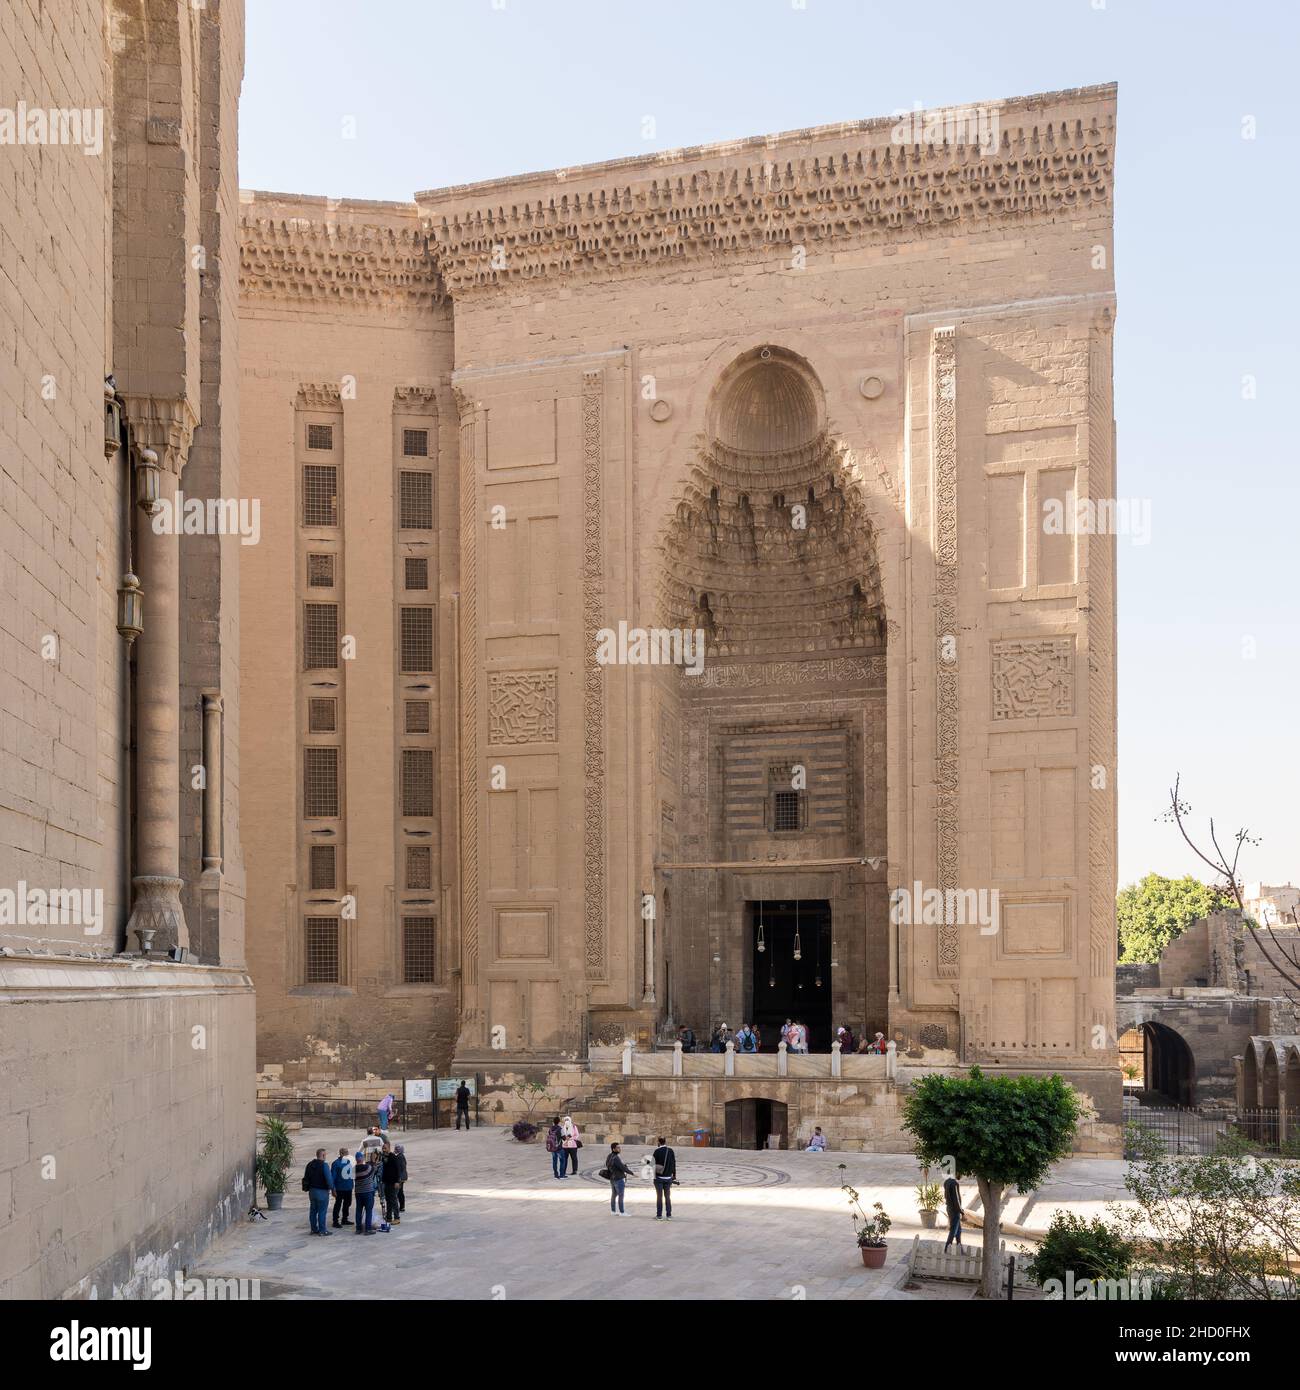 Cairo, Egypt - November 27 2021: Facade of Islamic Mamluk era Mosque and Madrassa of Sultan Hassan, with side facade of royal era Al Rifai Mosque, with few visitors, Old Cairo Stock Photo